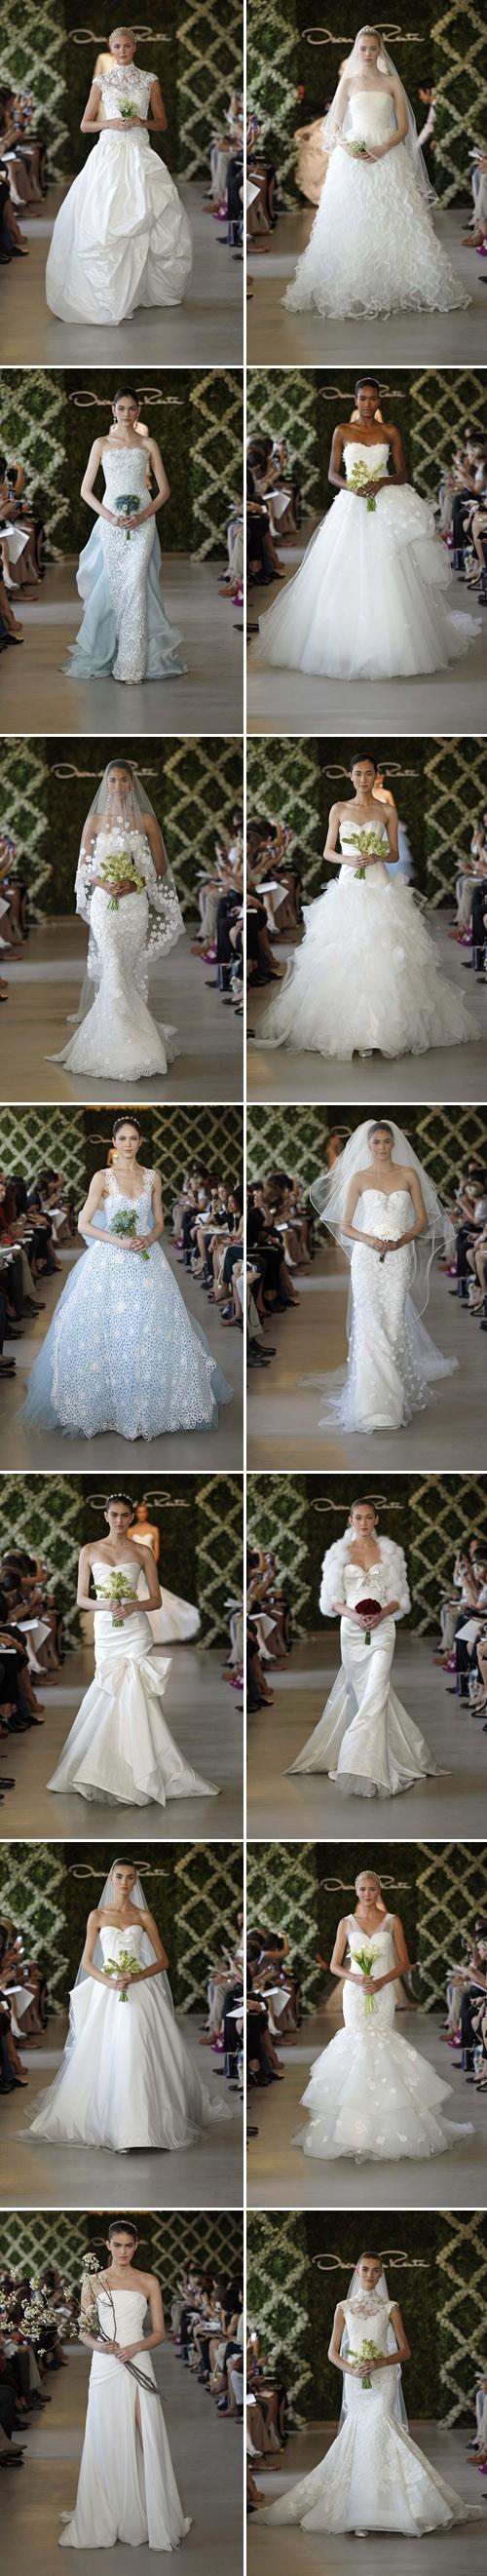 Mariage - 2013 Robes de mariée ♥ Oscar De La Renta spéciales robes de mariée de conception